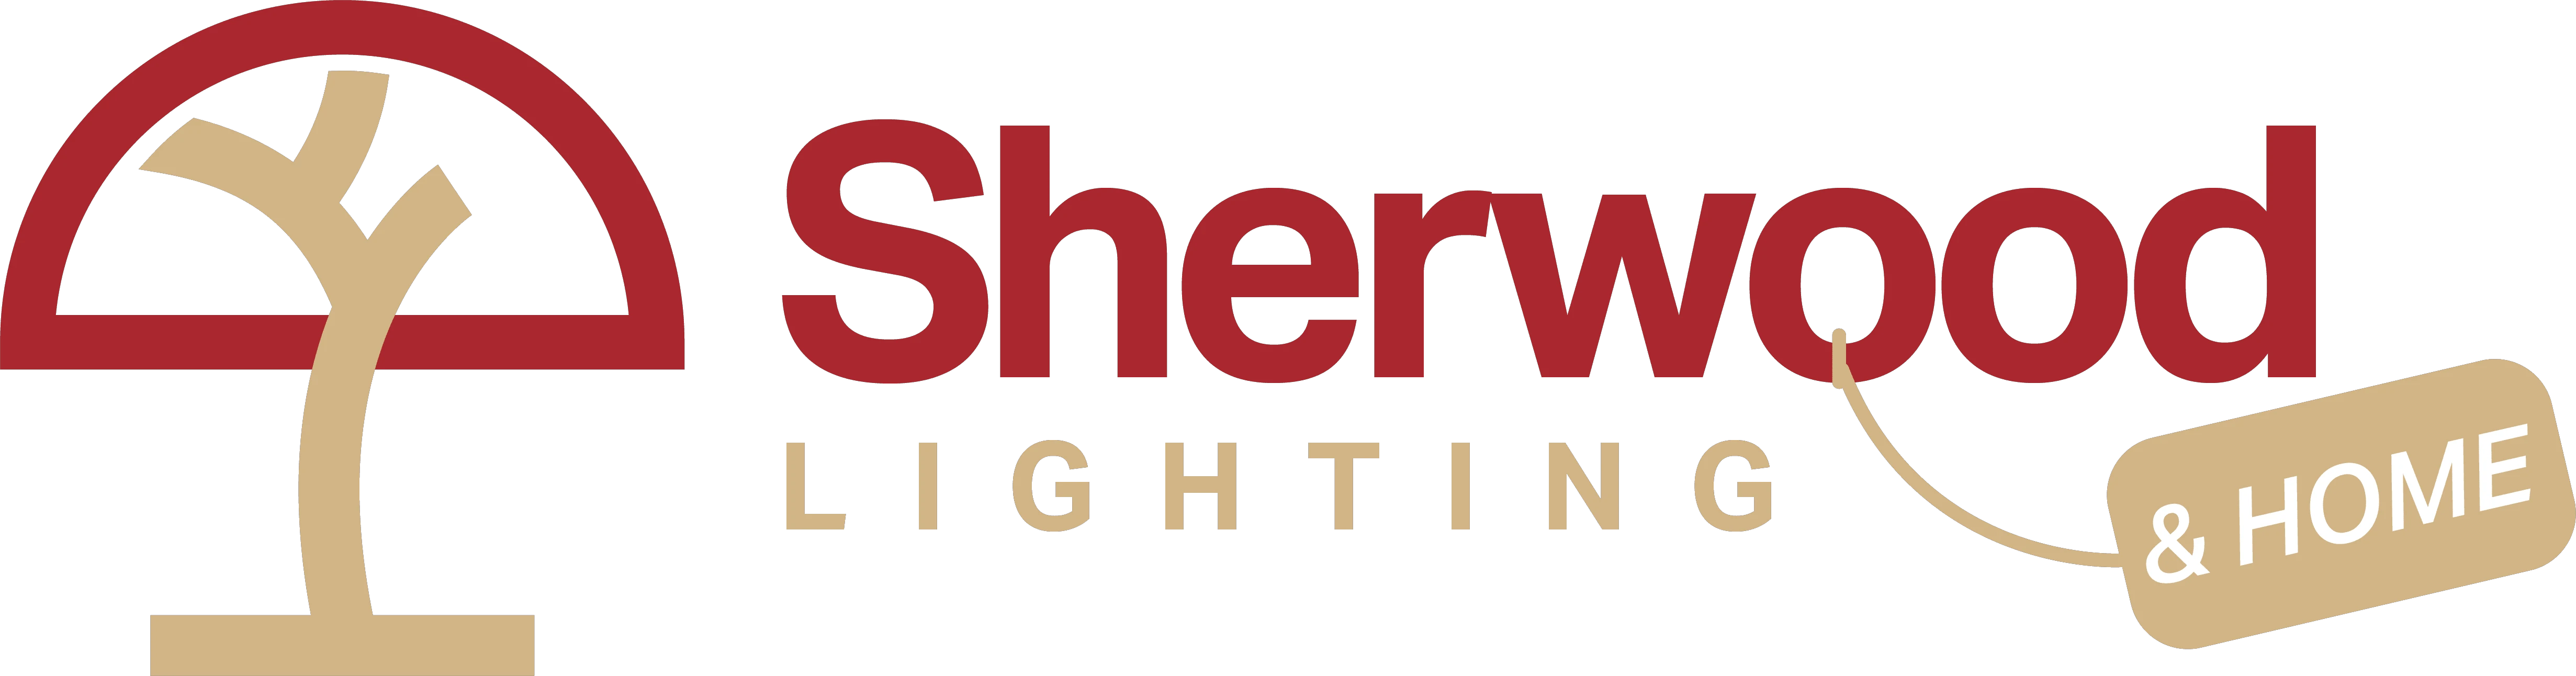  Sherwood Lighting Voucher Code